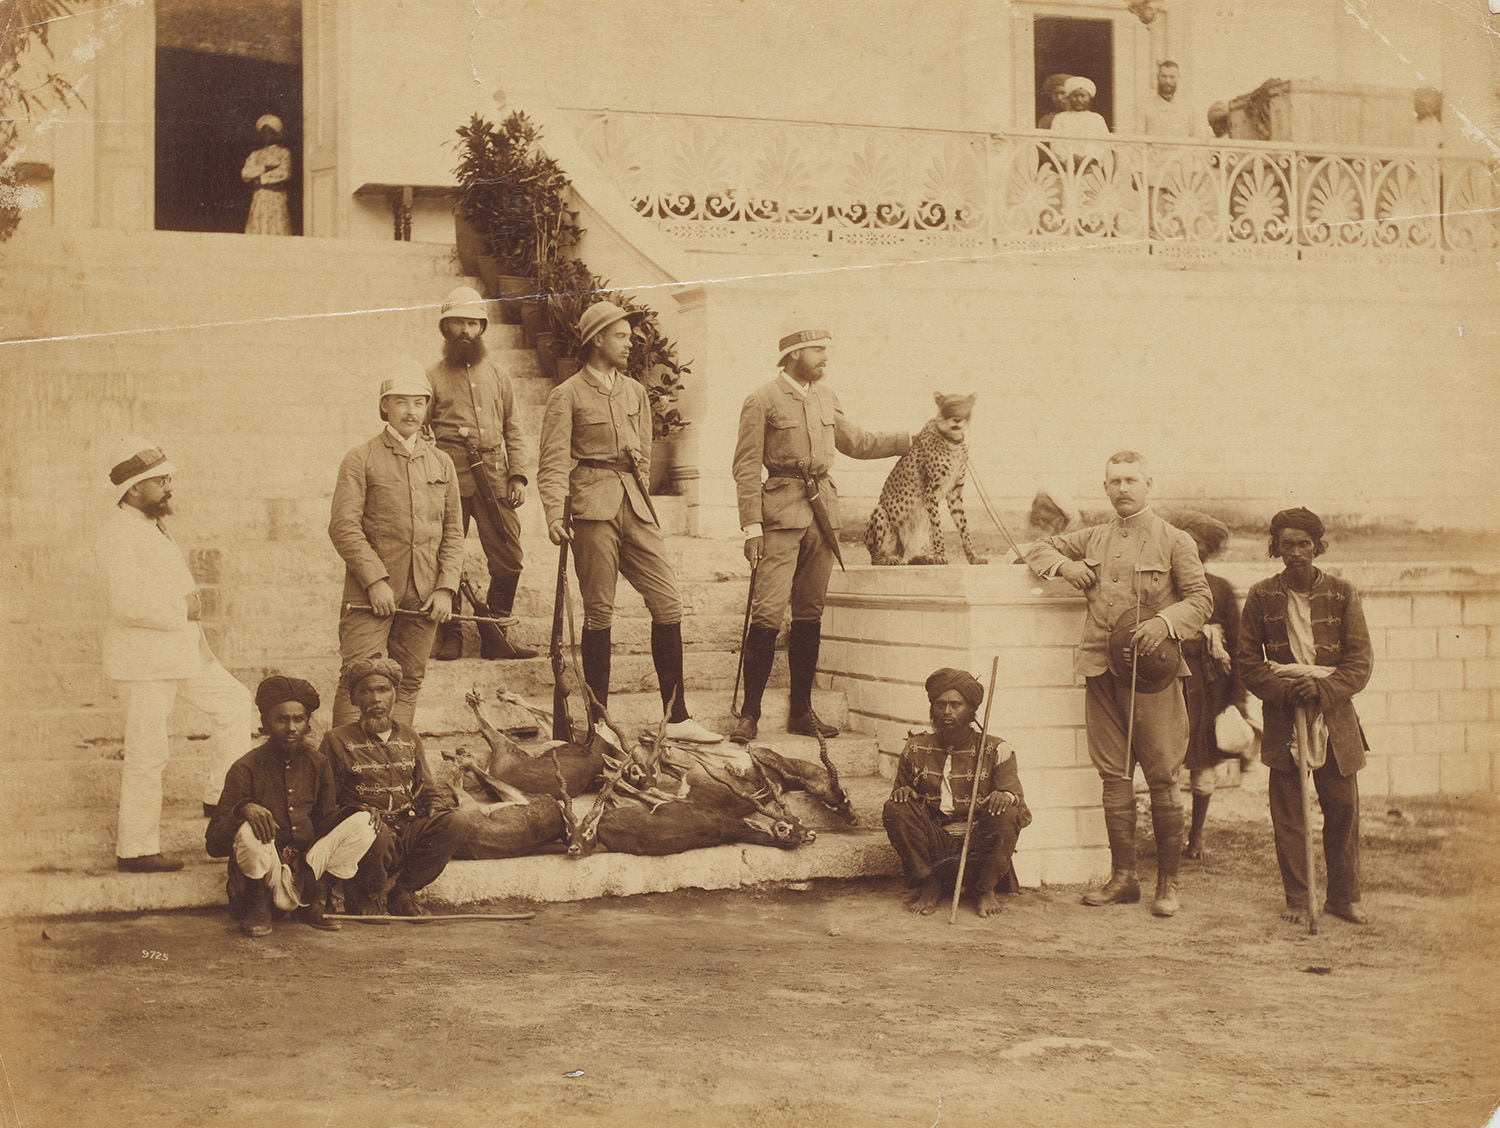 Visiting Lala Deen Dayal’s India - 19th century, Hyderabad, Lala Deen Dayal, Nizam, photography